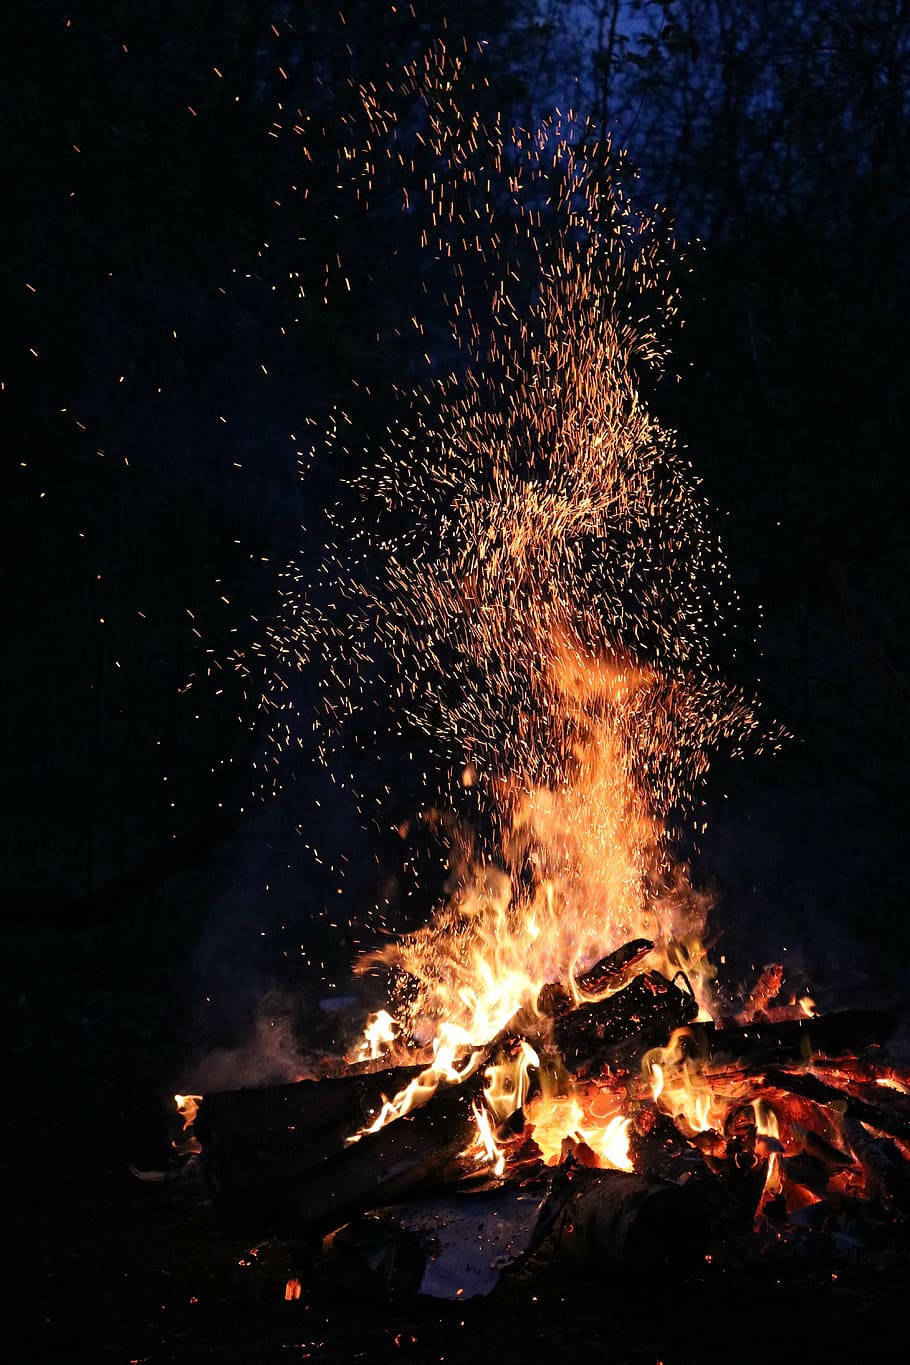 fogueira durante a noite, noite, floresta, chama, faísca, febre, fogo, lenha, queimaduras, fogo - fenômeno natural